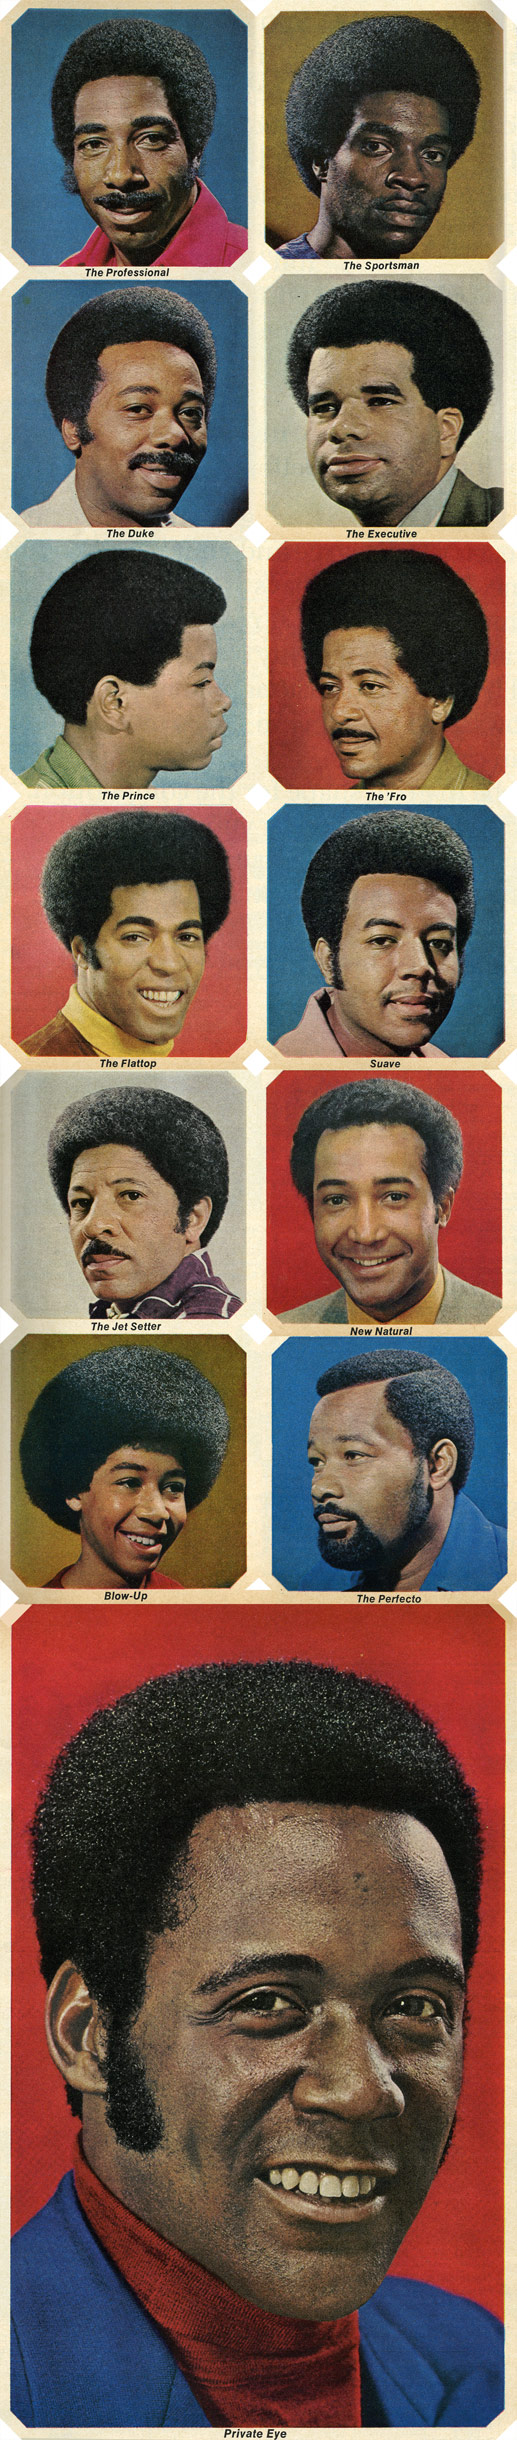 The Gallery of Weird-Ass Haircuts